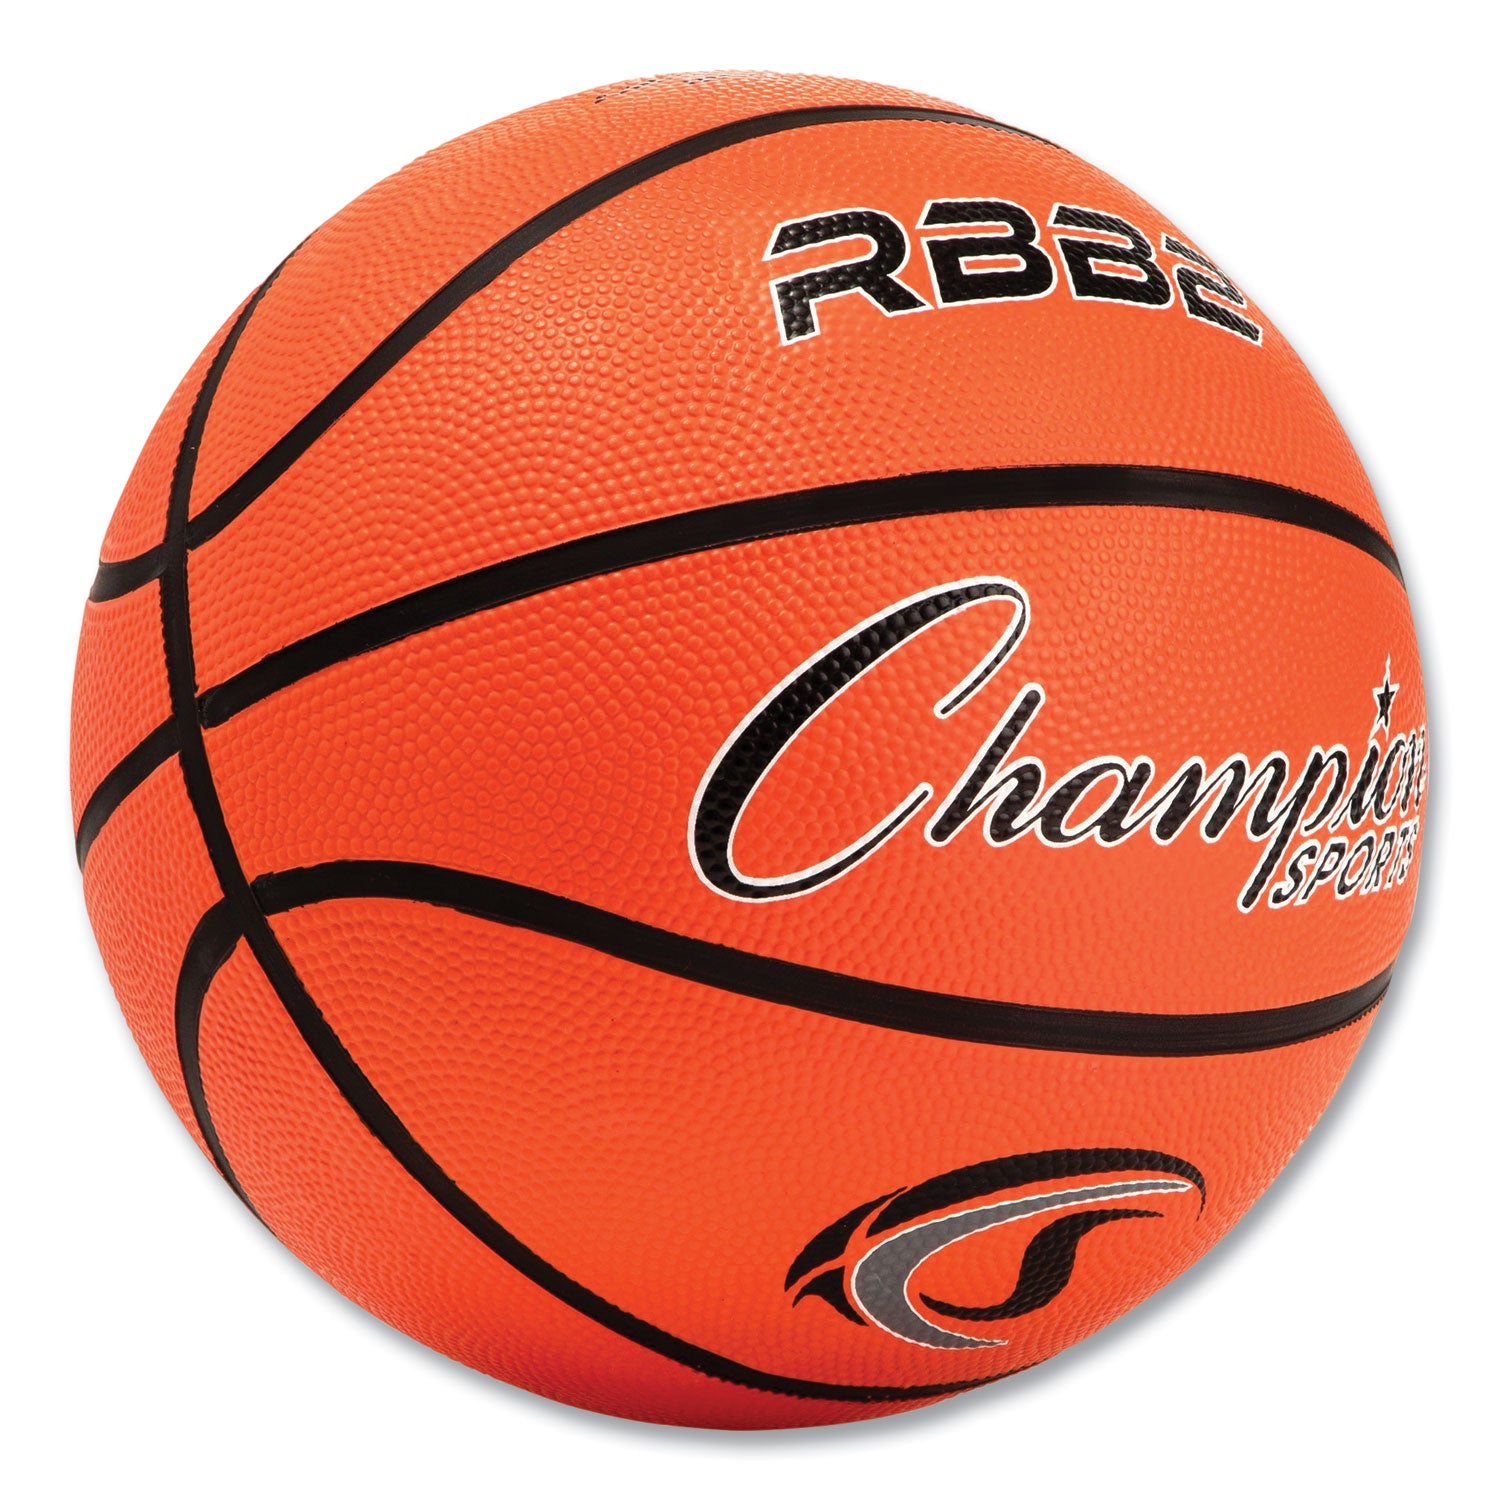 rubber-sports-ball-for-basketball-no-5-junior-size-orange_csirbb2 - 5